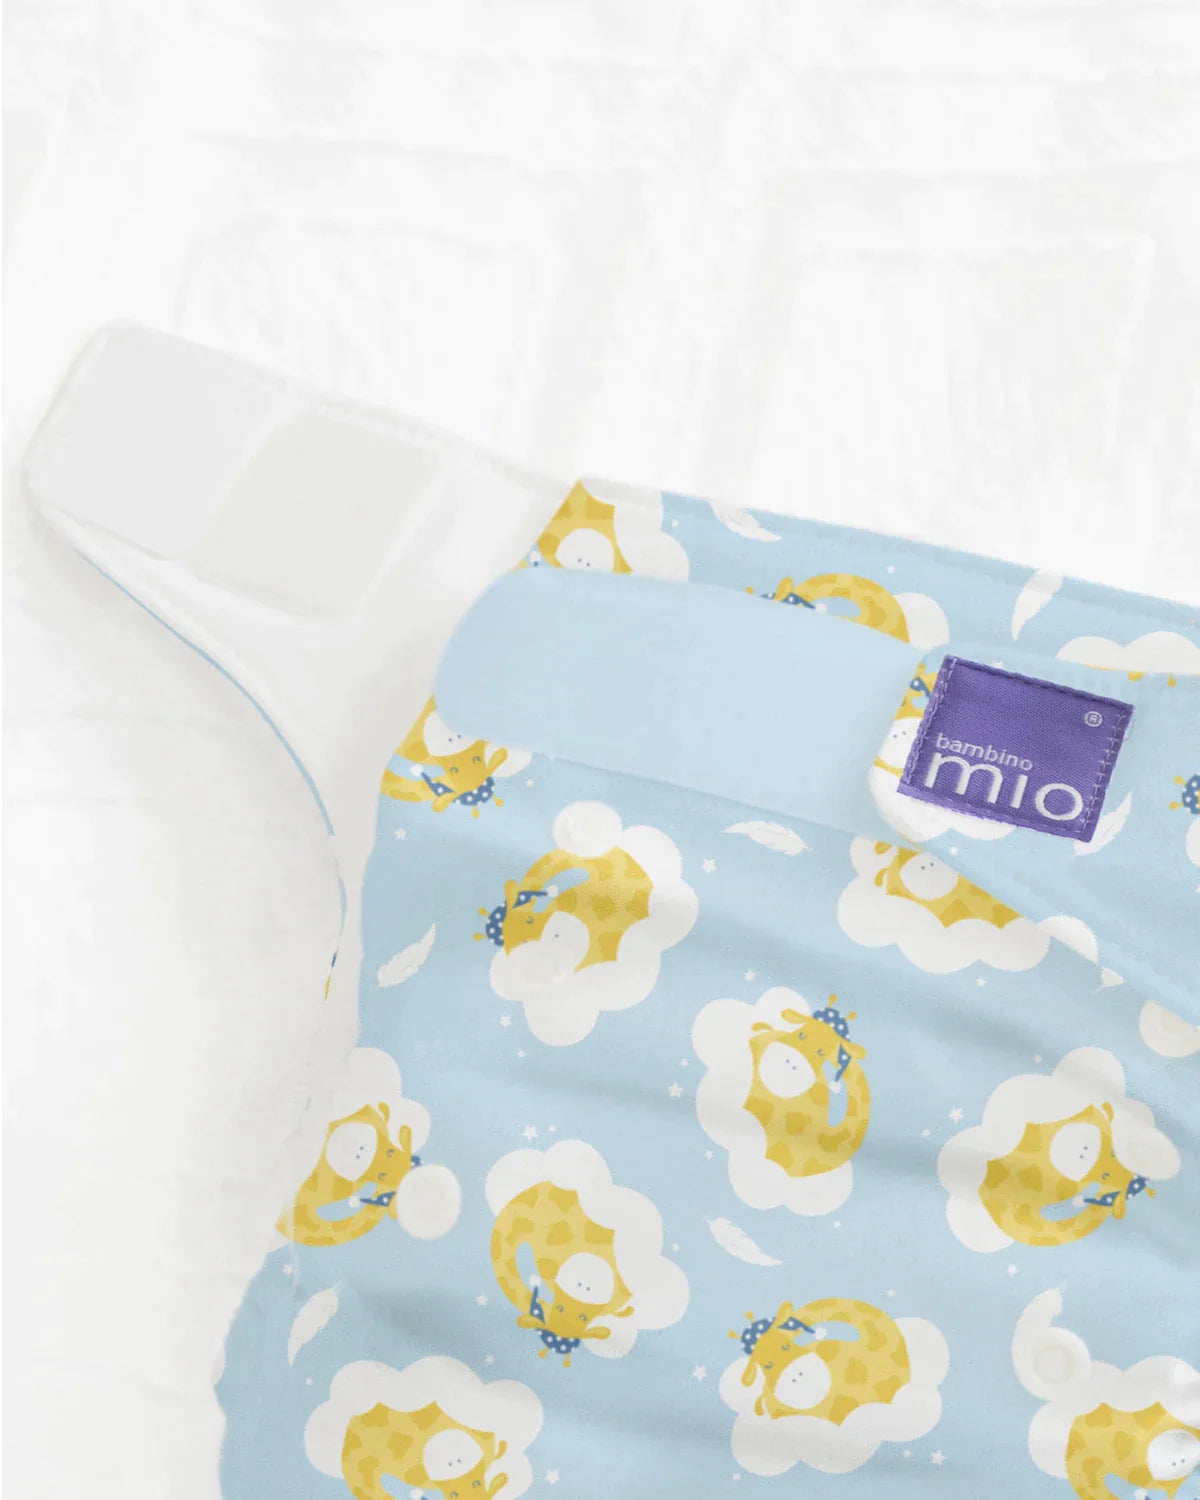 miosolo Classic All-In-One Reusable diaper set| BAMBINO MIO®